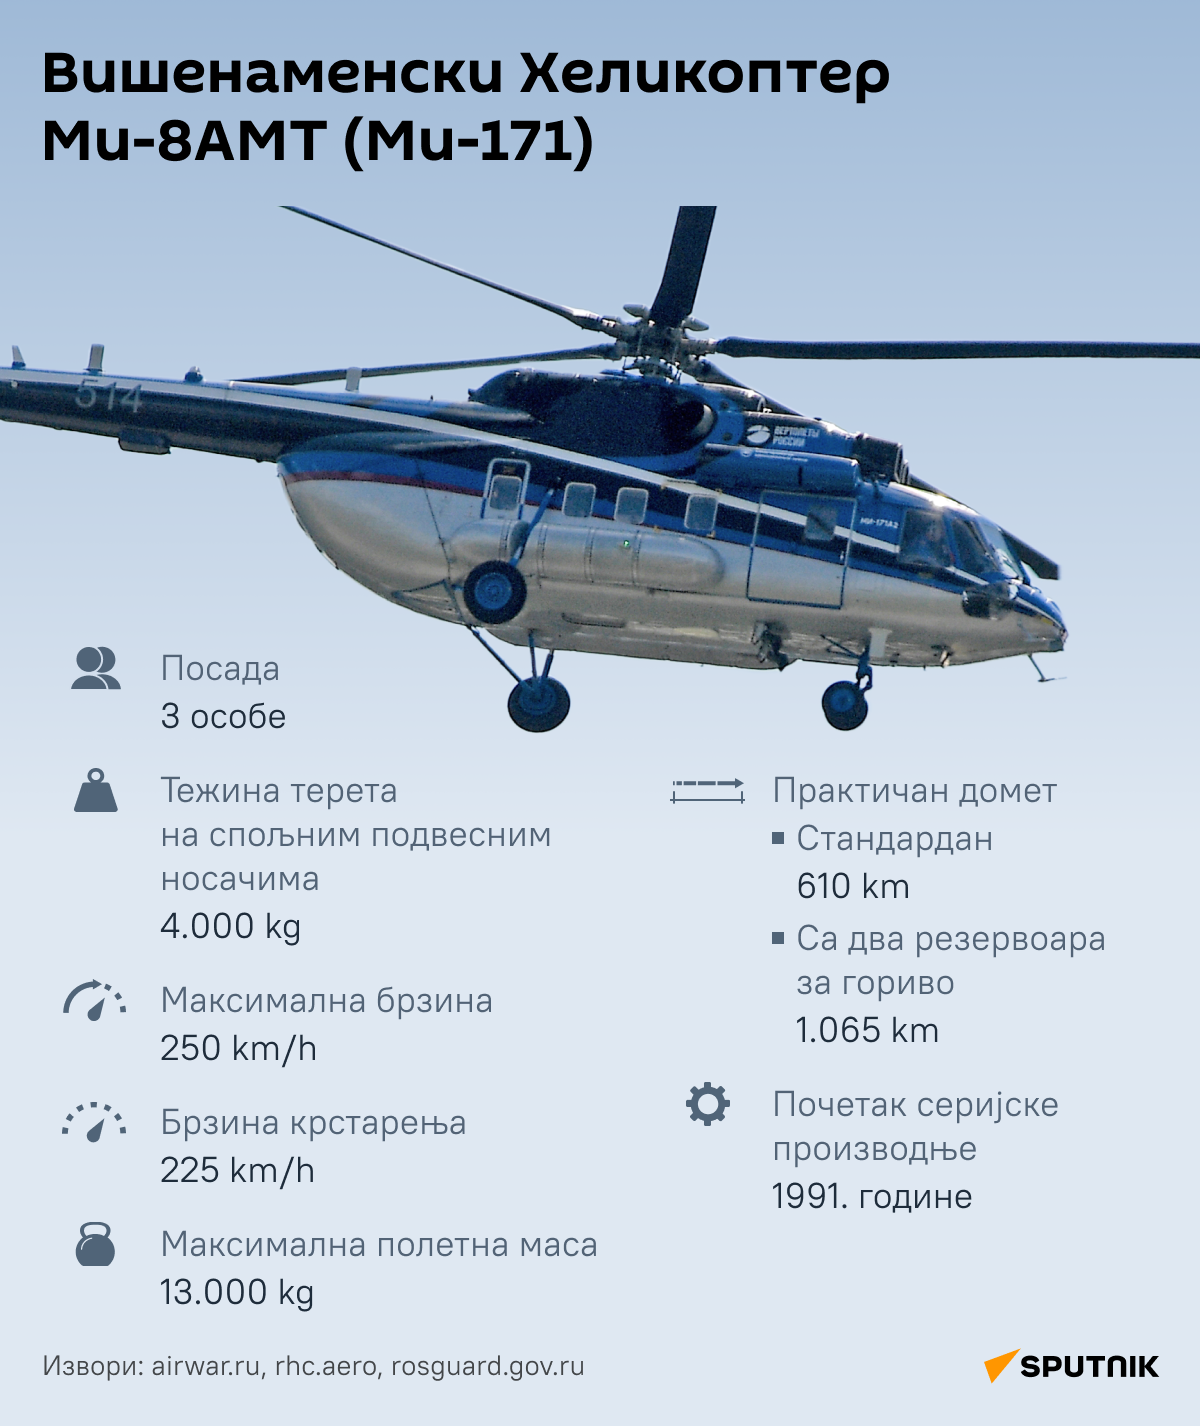 ИНФОГРАФИКА Вишенаменски хеликоптер Ми-8АМТ (Ми-171)  Ћирилица деск - Sputnik Србија